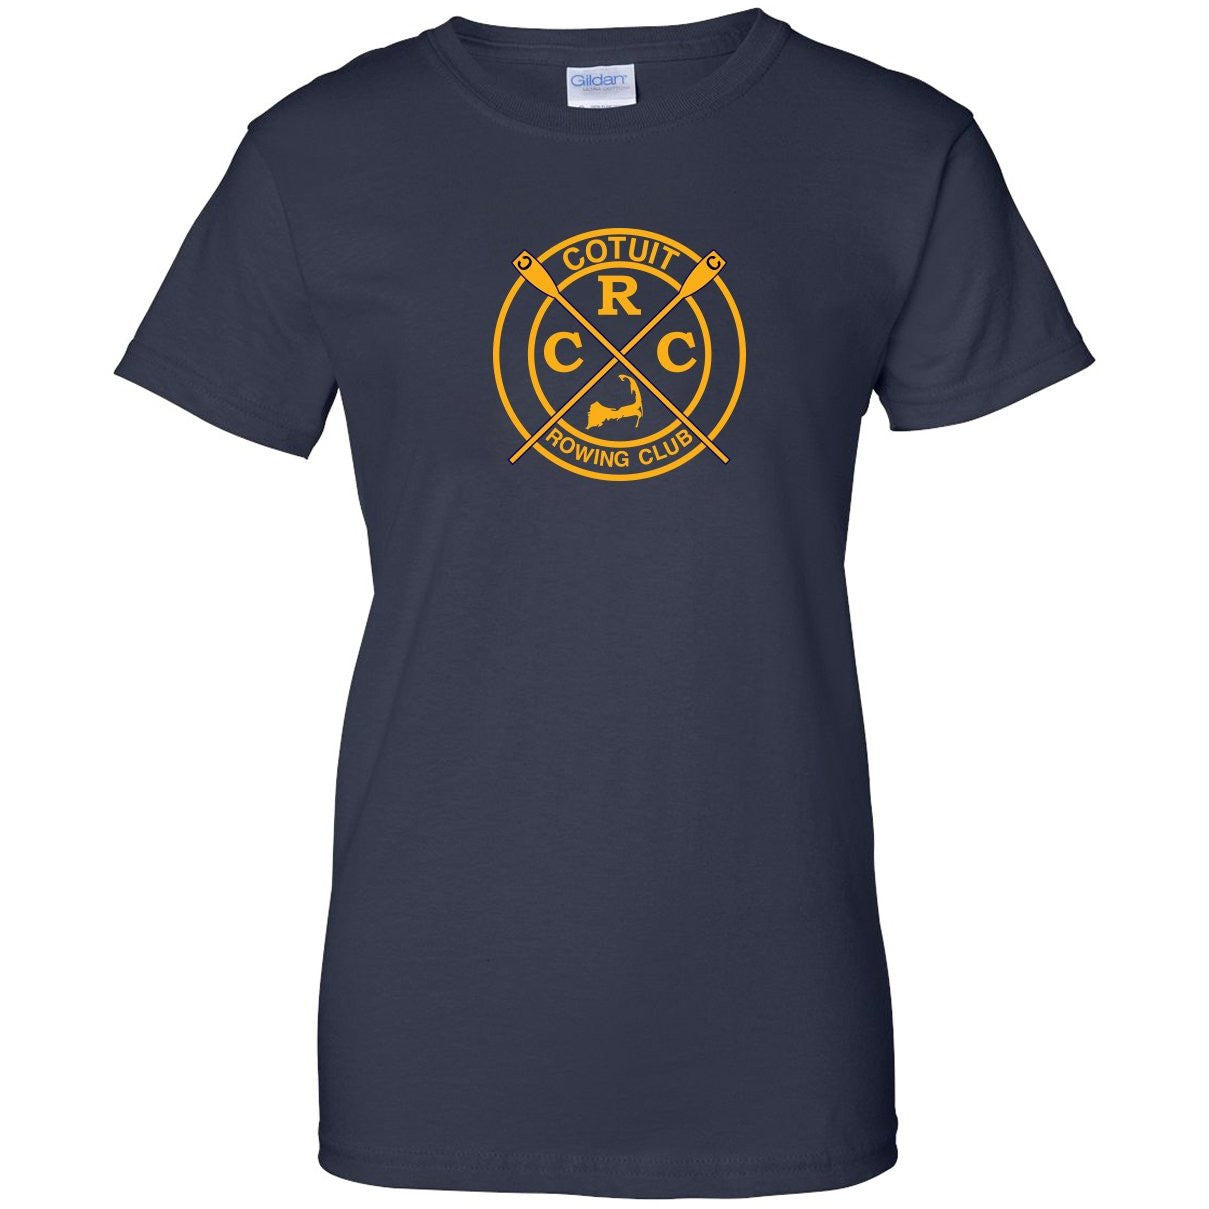 100% Cotton Cotuit Rowing Club Women's Team Spirit T-Shirt